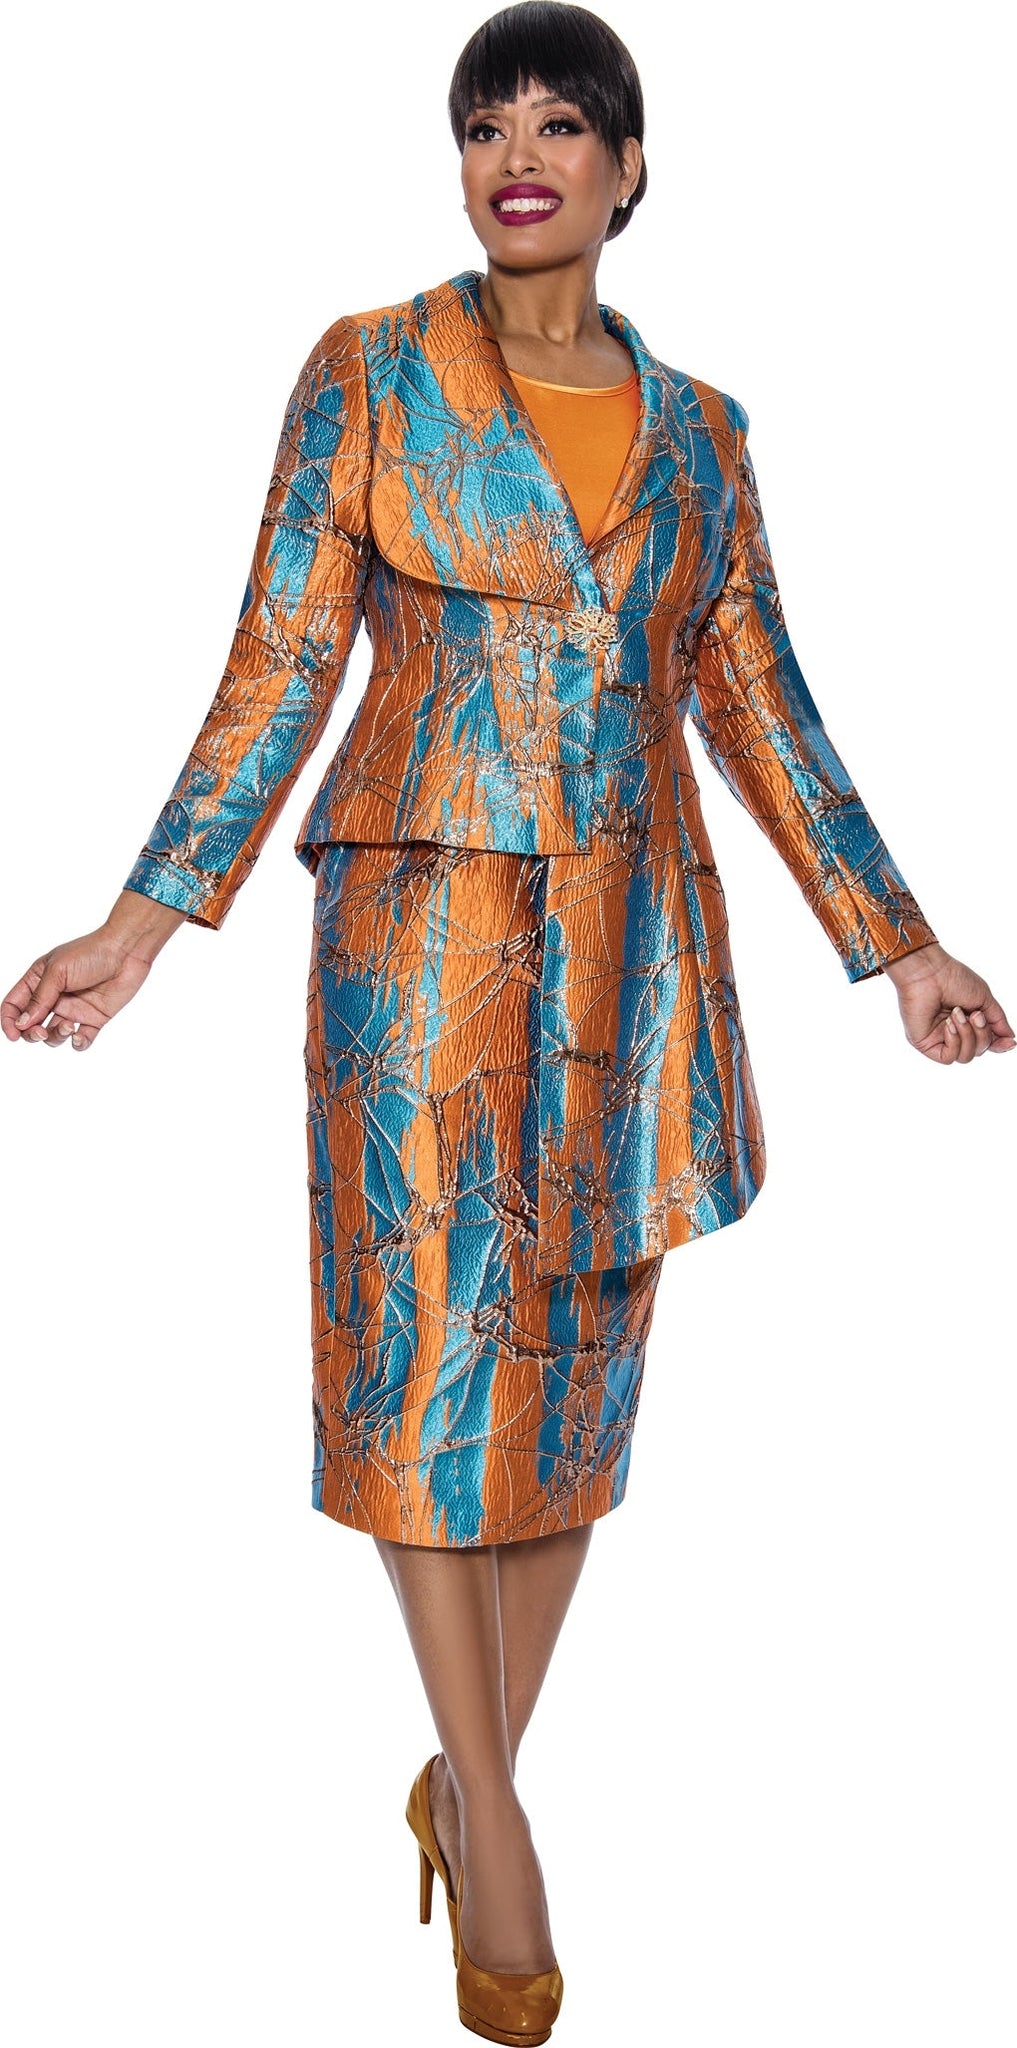 Divine Queen Skirt Suit 2203C-Multi - Church Suits For Less